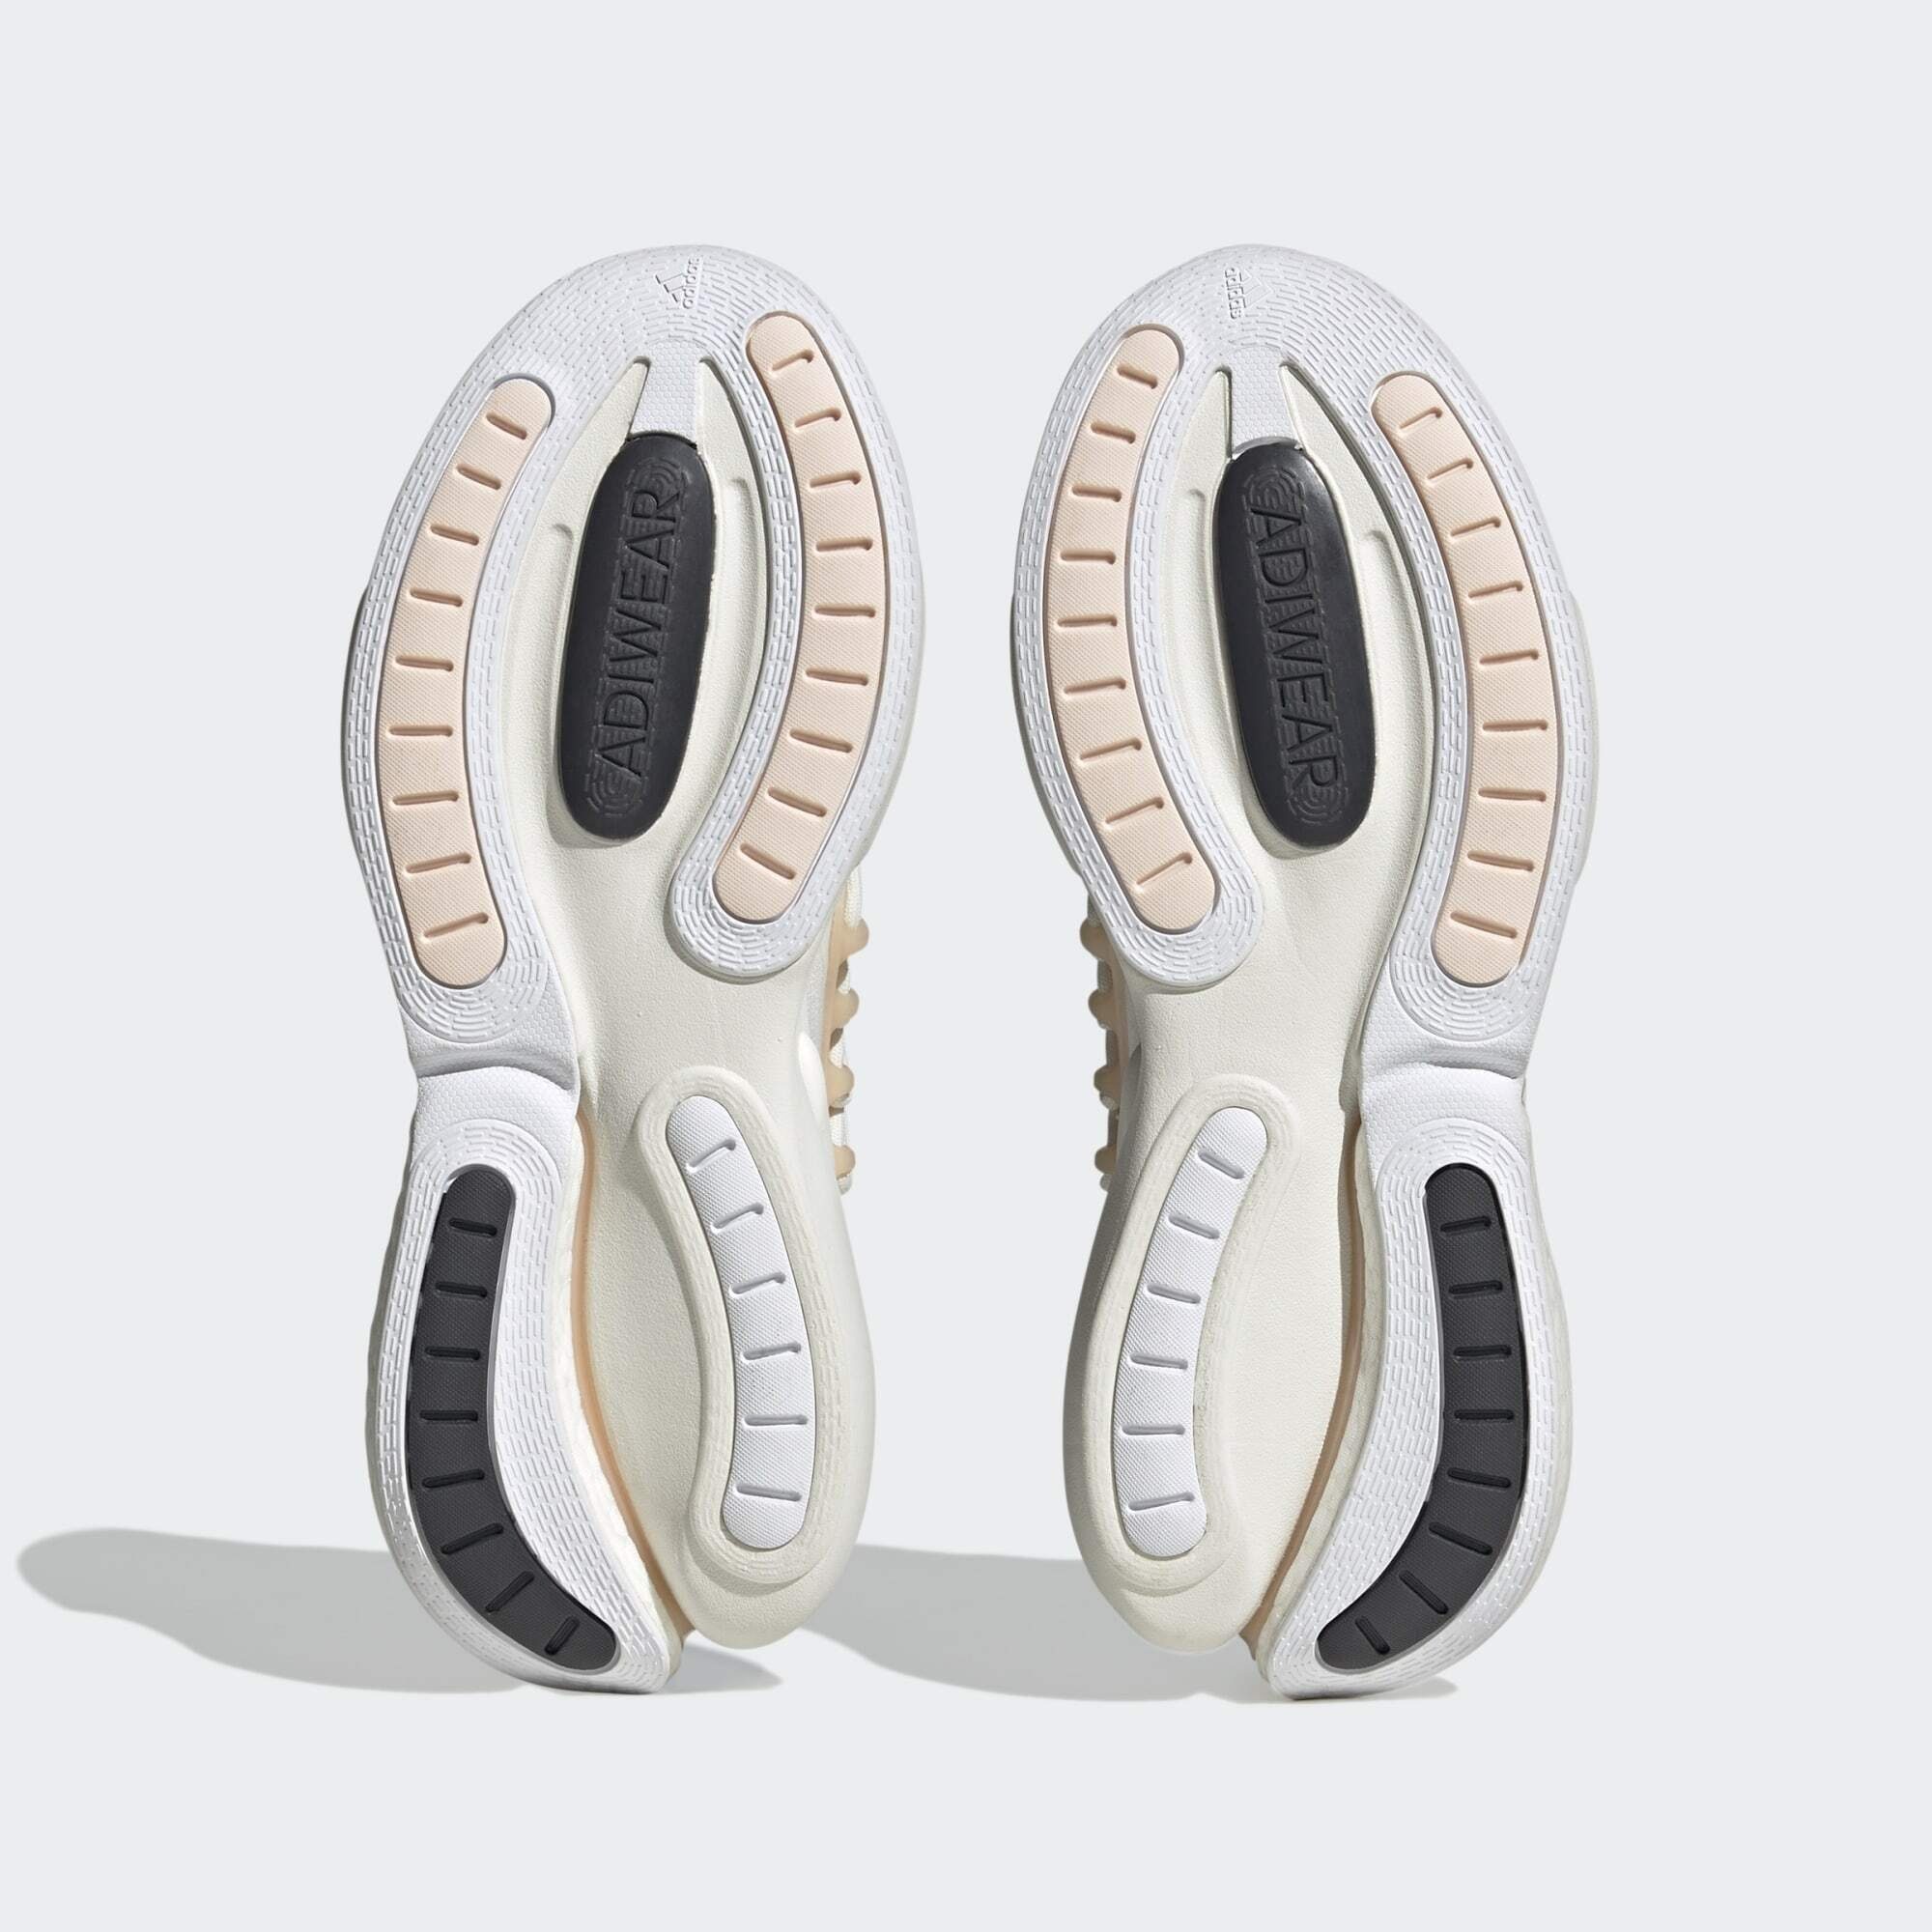 SCHUH adidas ALPHABOOST adidas Five Cloud White / Sportswear Sneaker V1 Wonder Quartz / Grey Performance